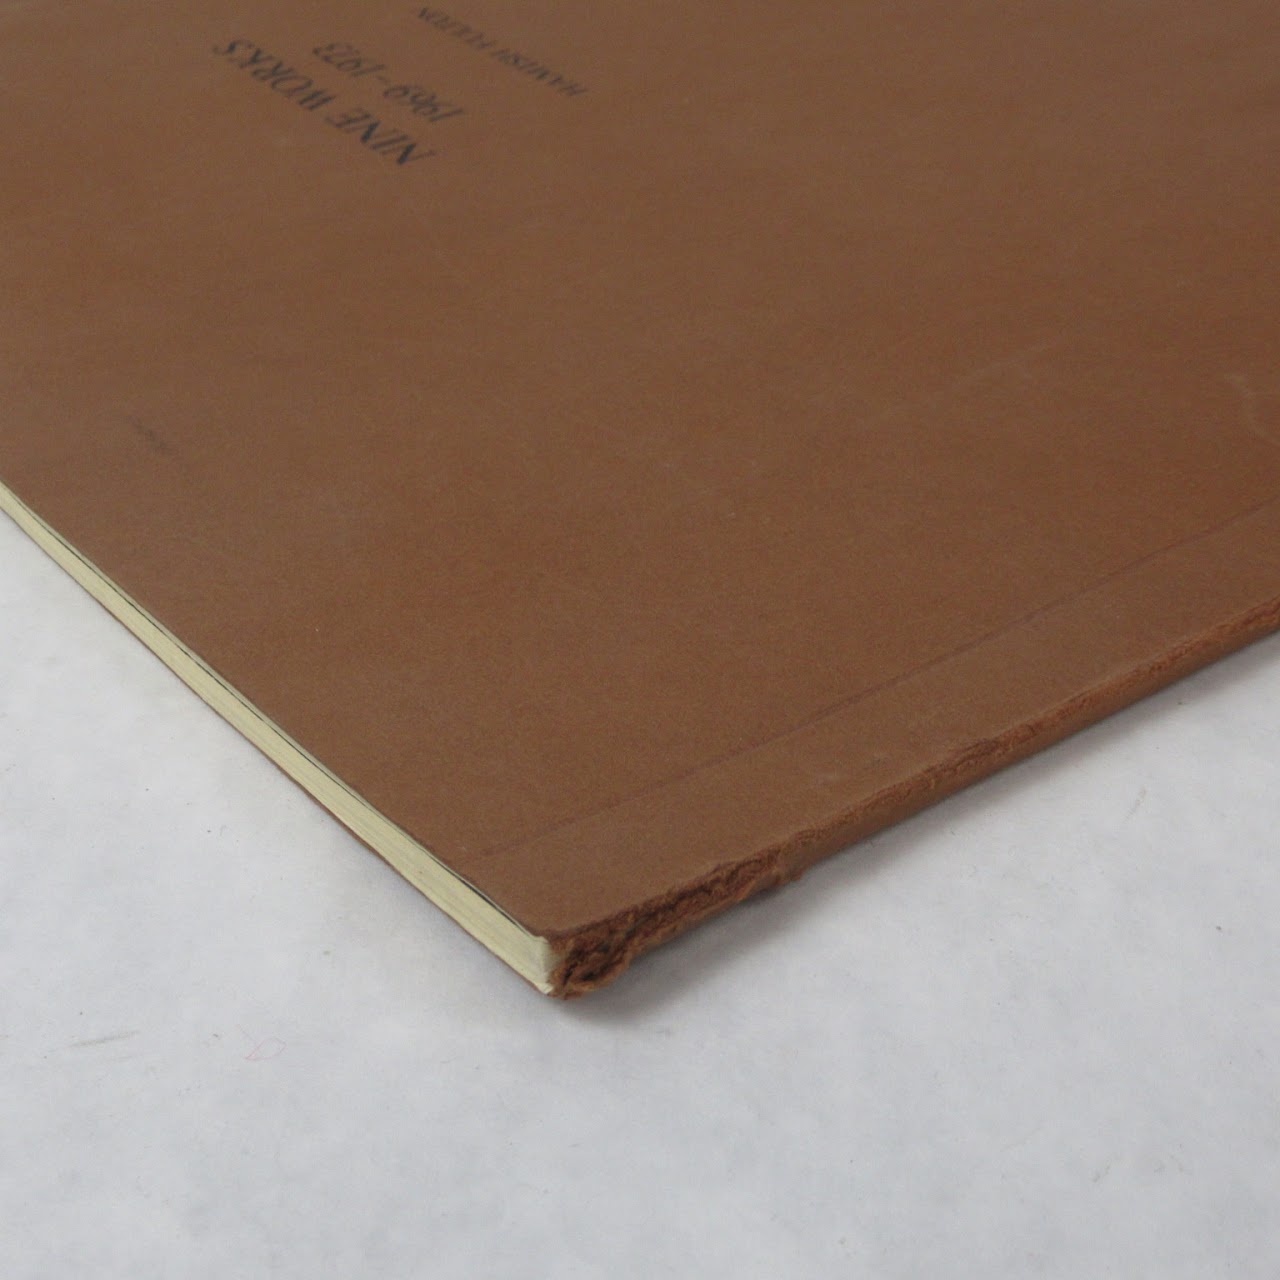 Hamish Fulton 'Nine Works 1969-1973' Rare Book